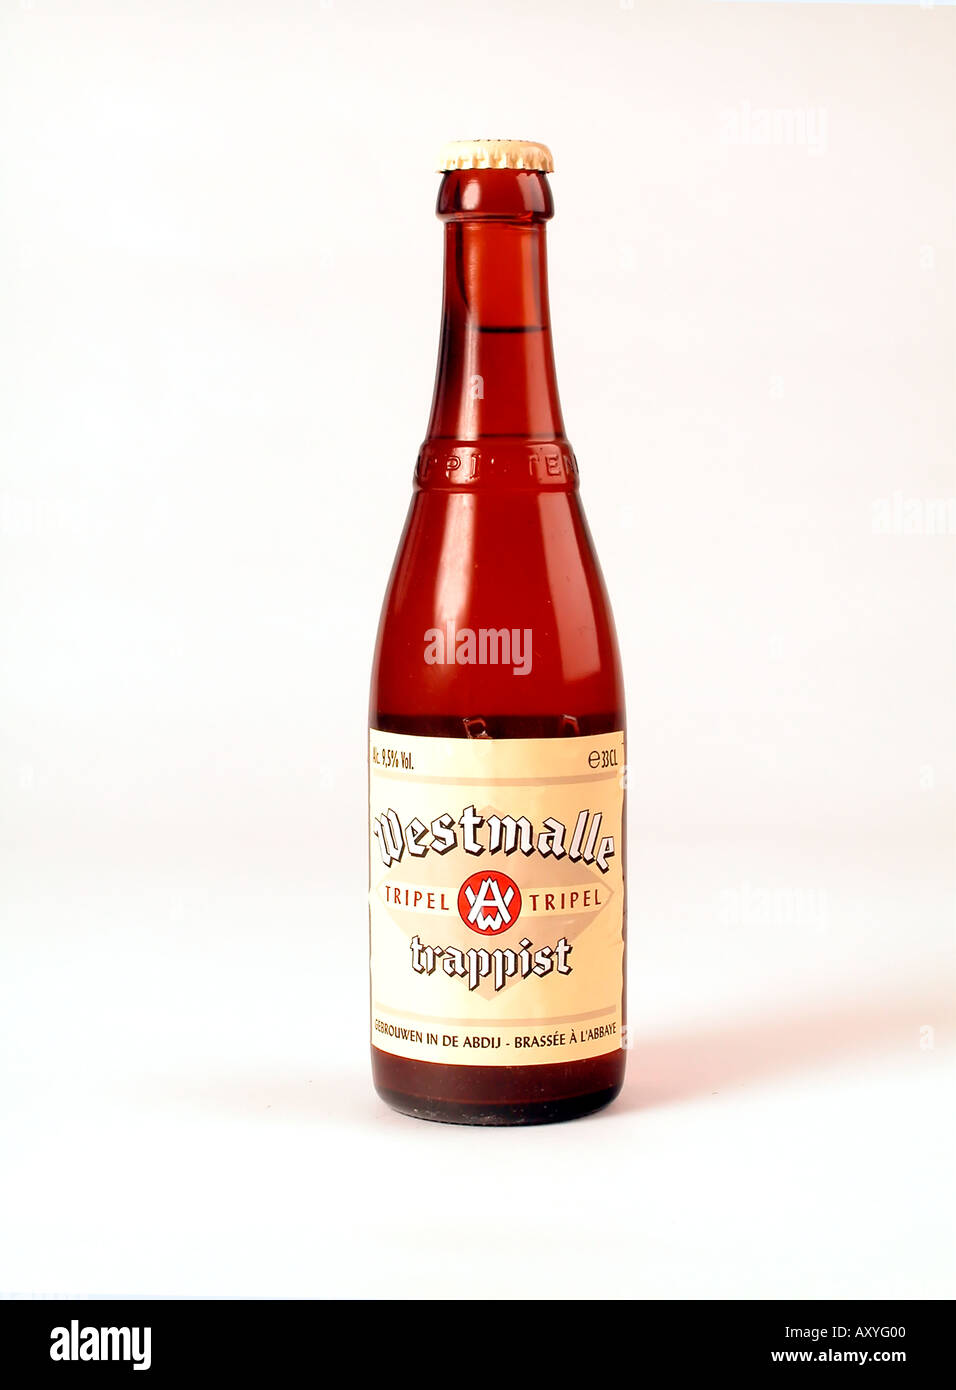 Bottle of Westmalle trappist tripel beer Malle Belgium Stock Photo - Alamy